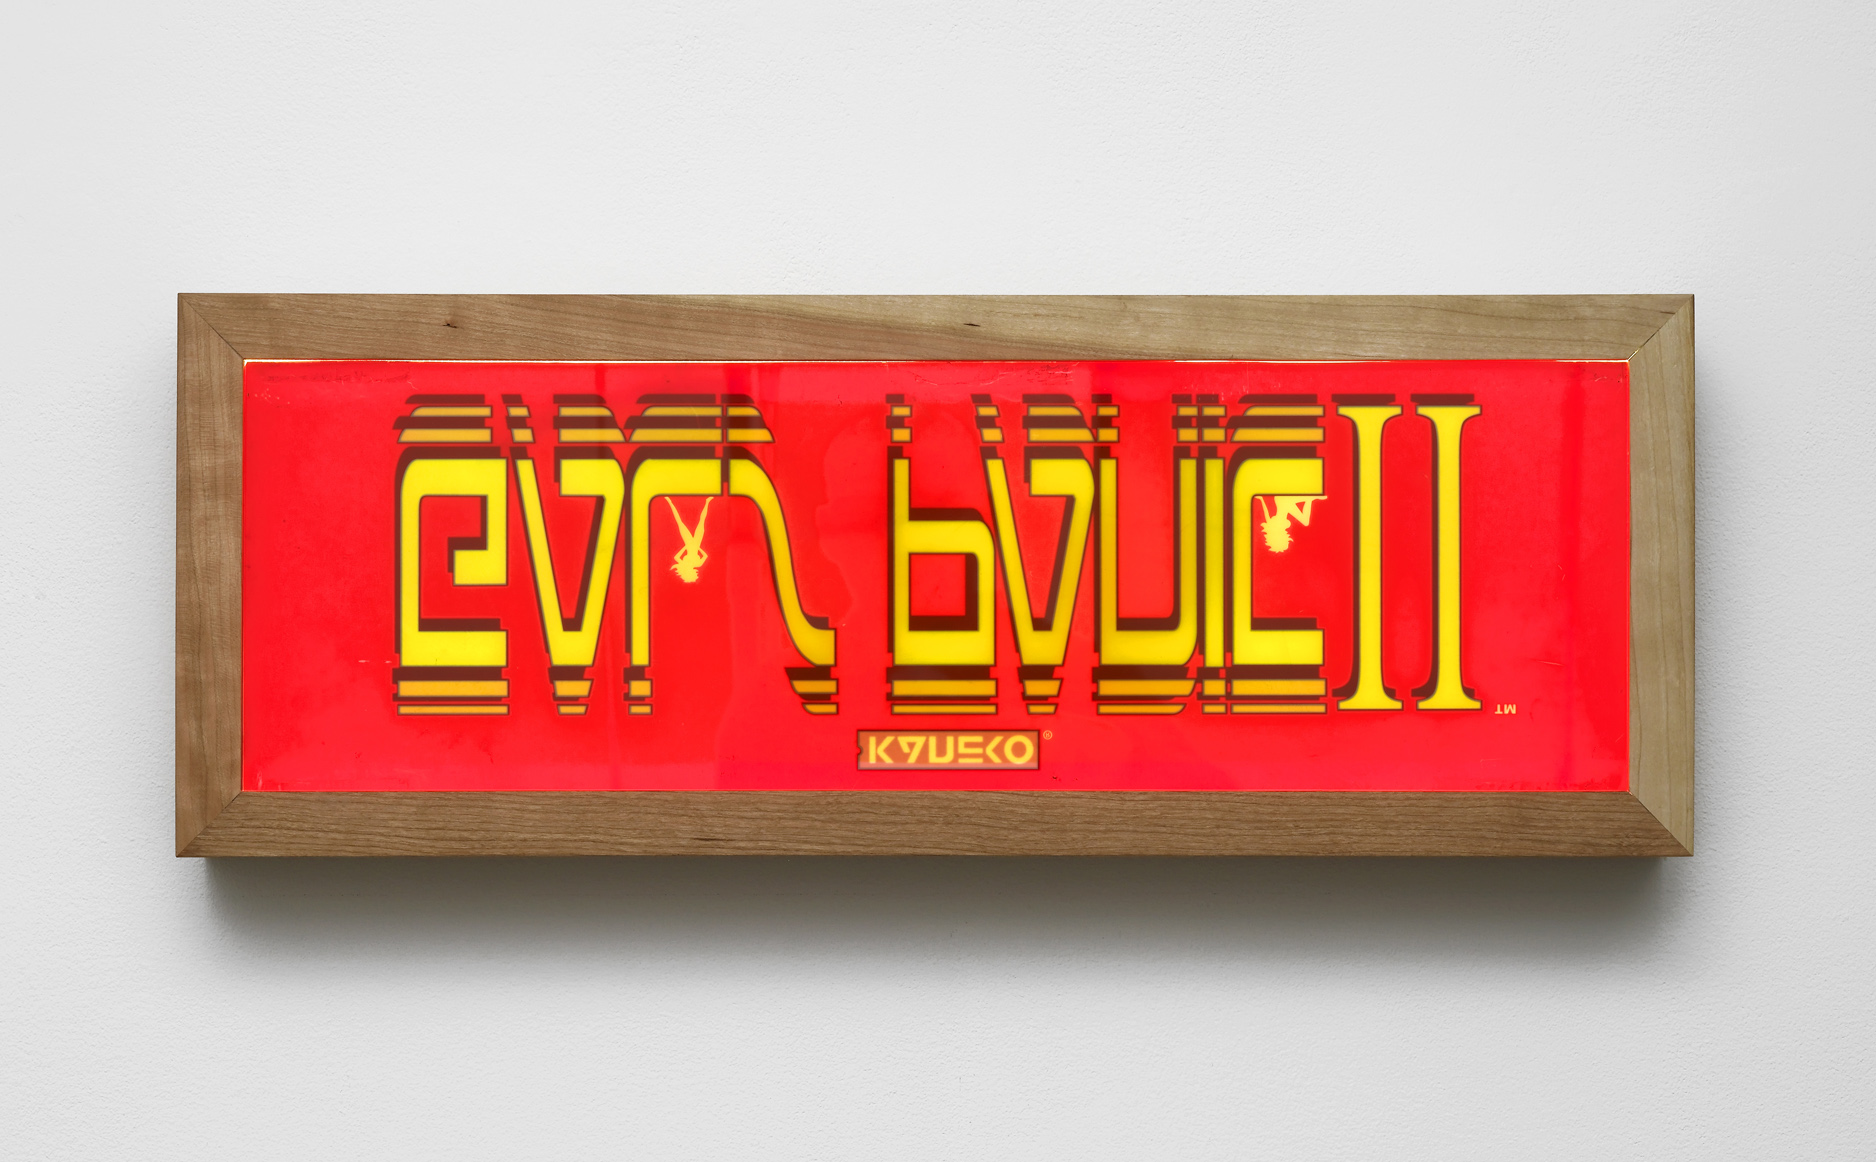      Untitled (Galls Panic II)   2013   Arcade marquee, lightbox   25.5 x 68.5 x 10 cm / 10 x 27 x 3.9 in  